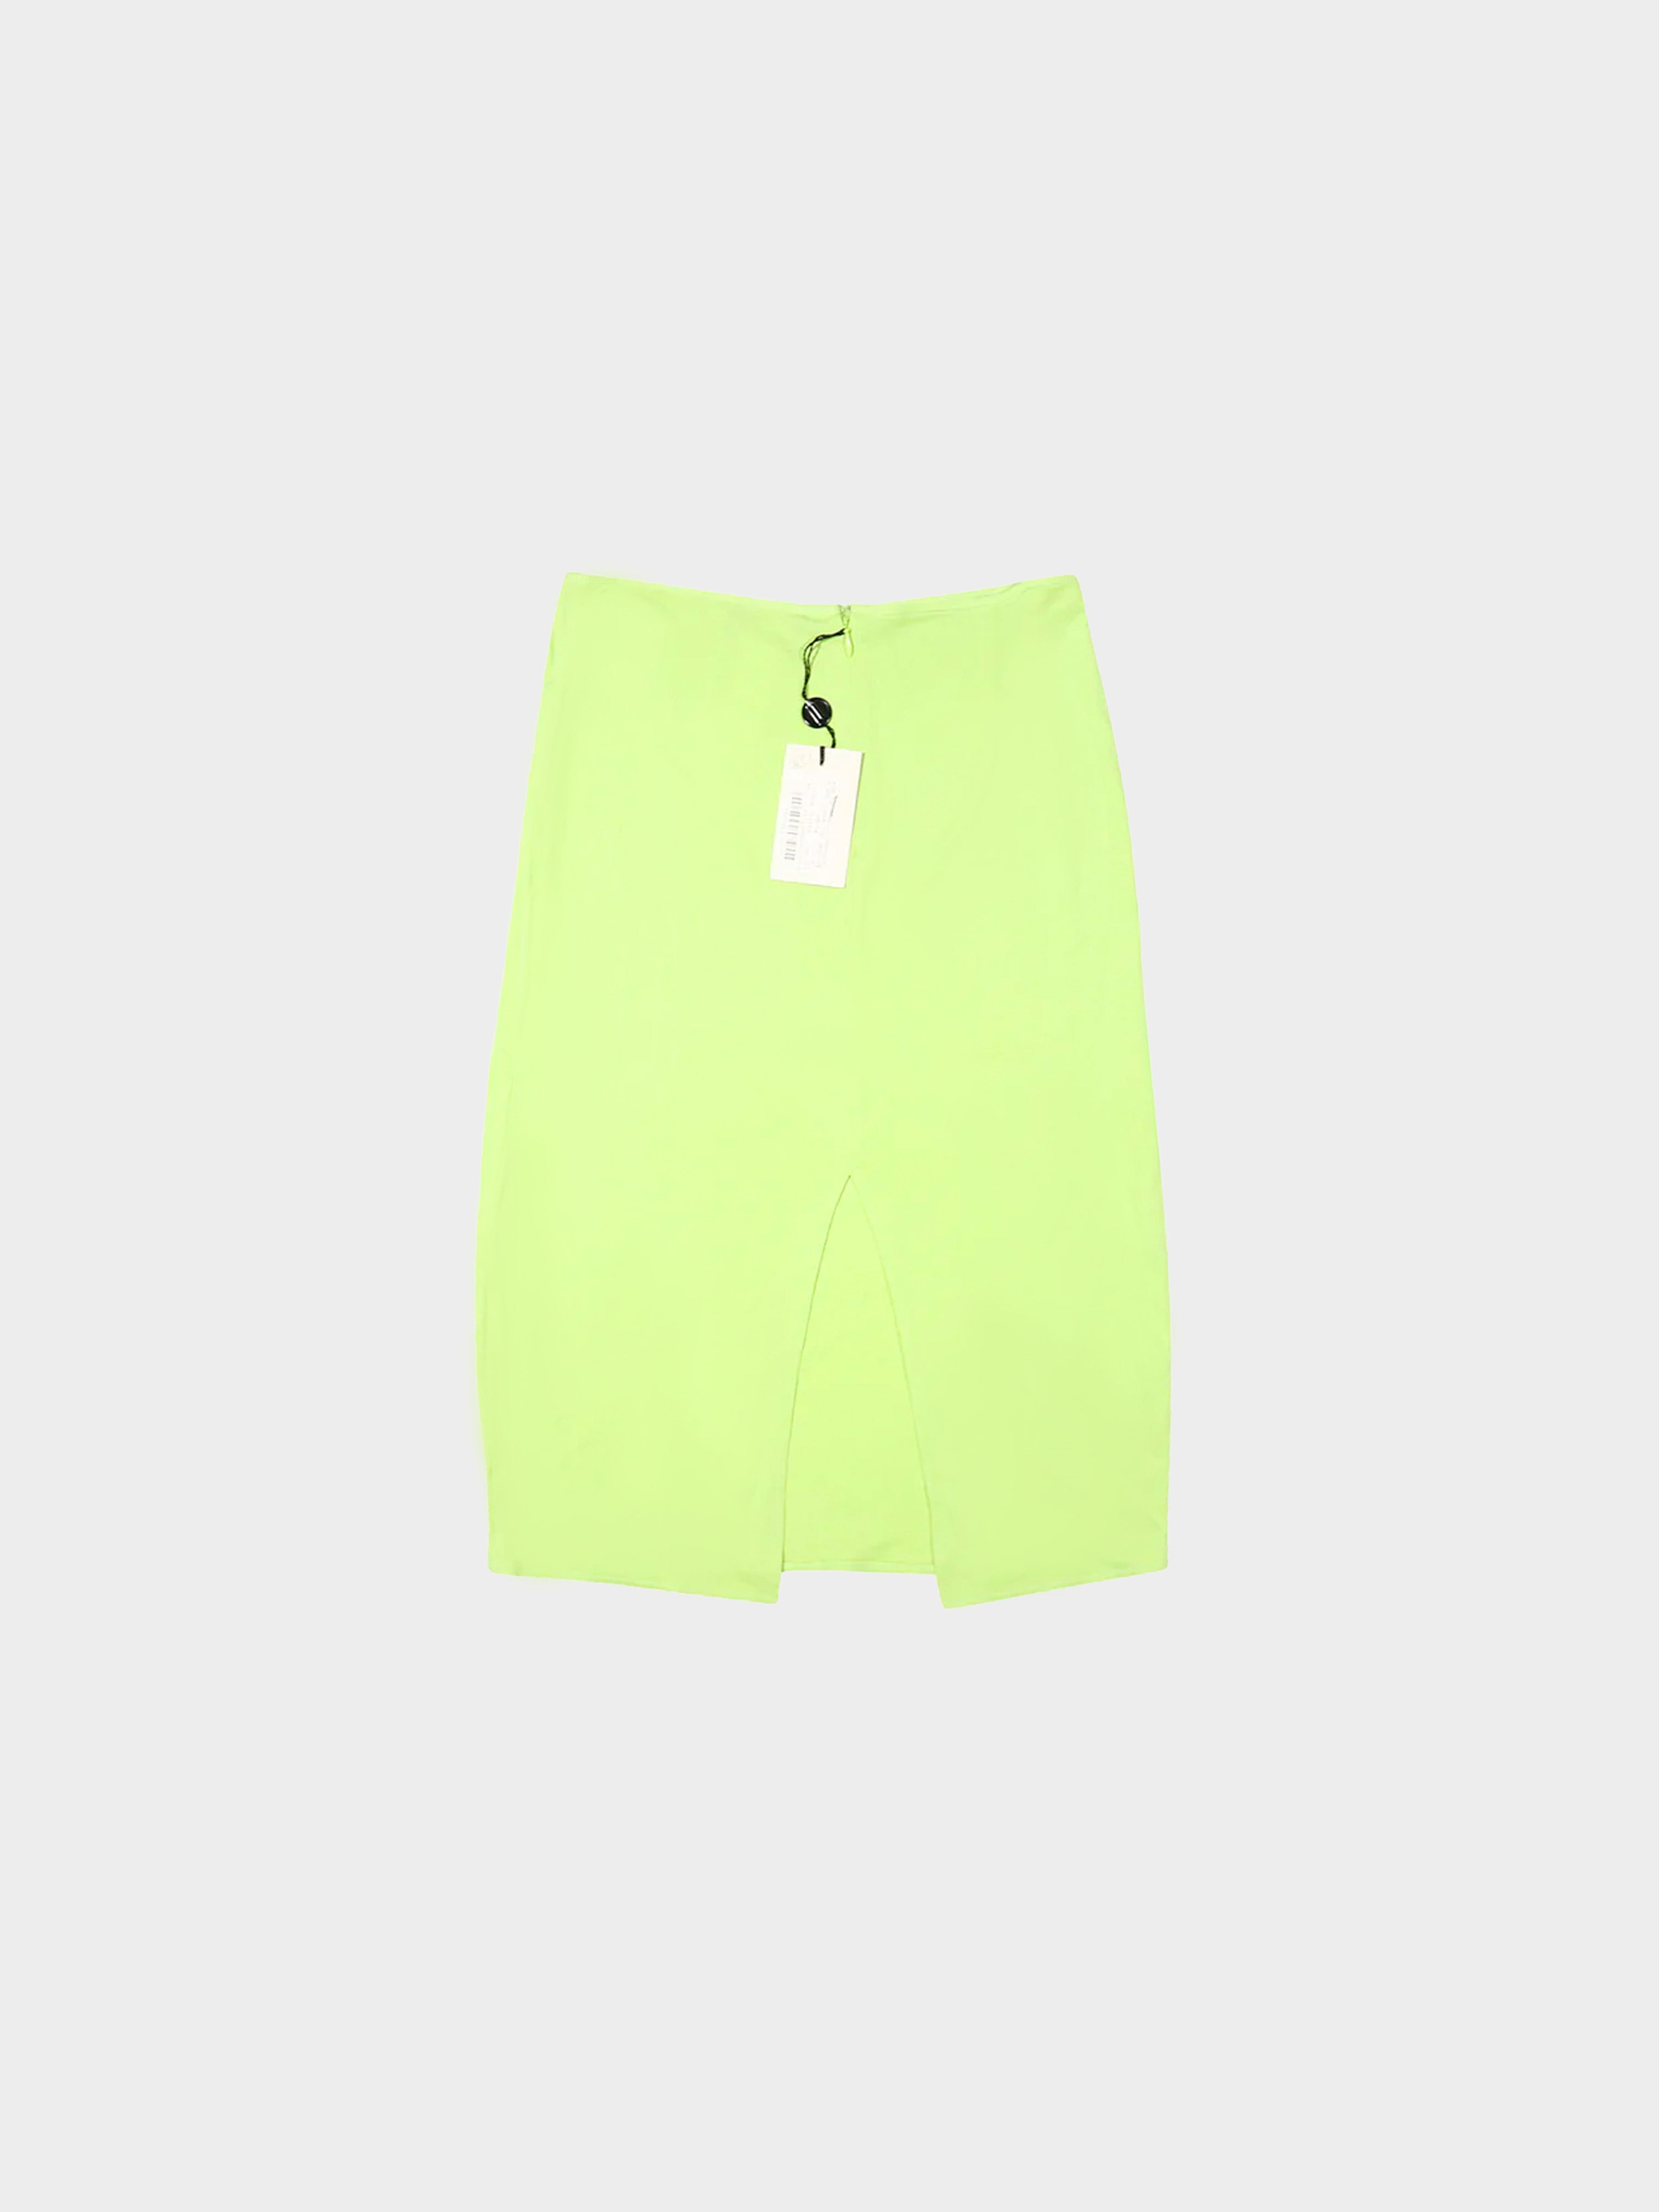 Gianni Versace SS 1998 Neon Green Skirt